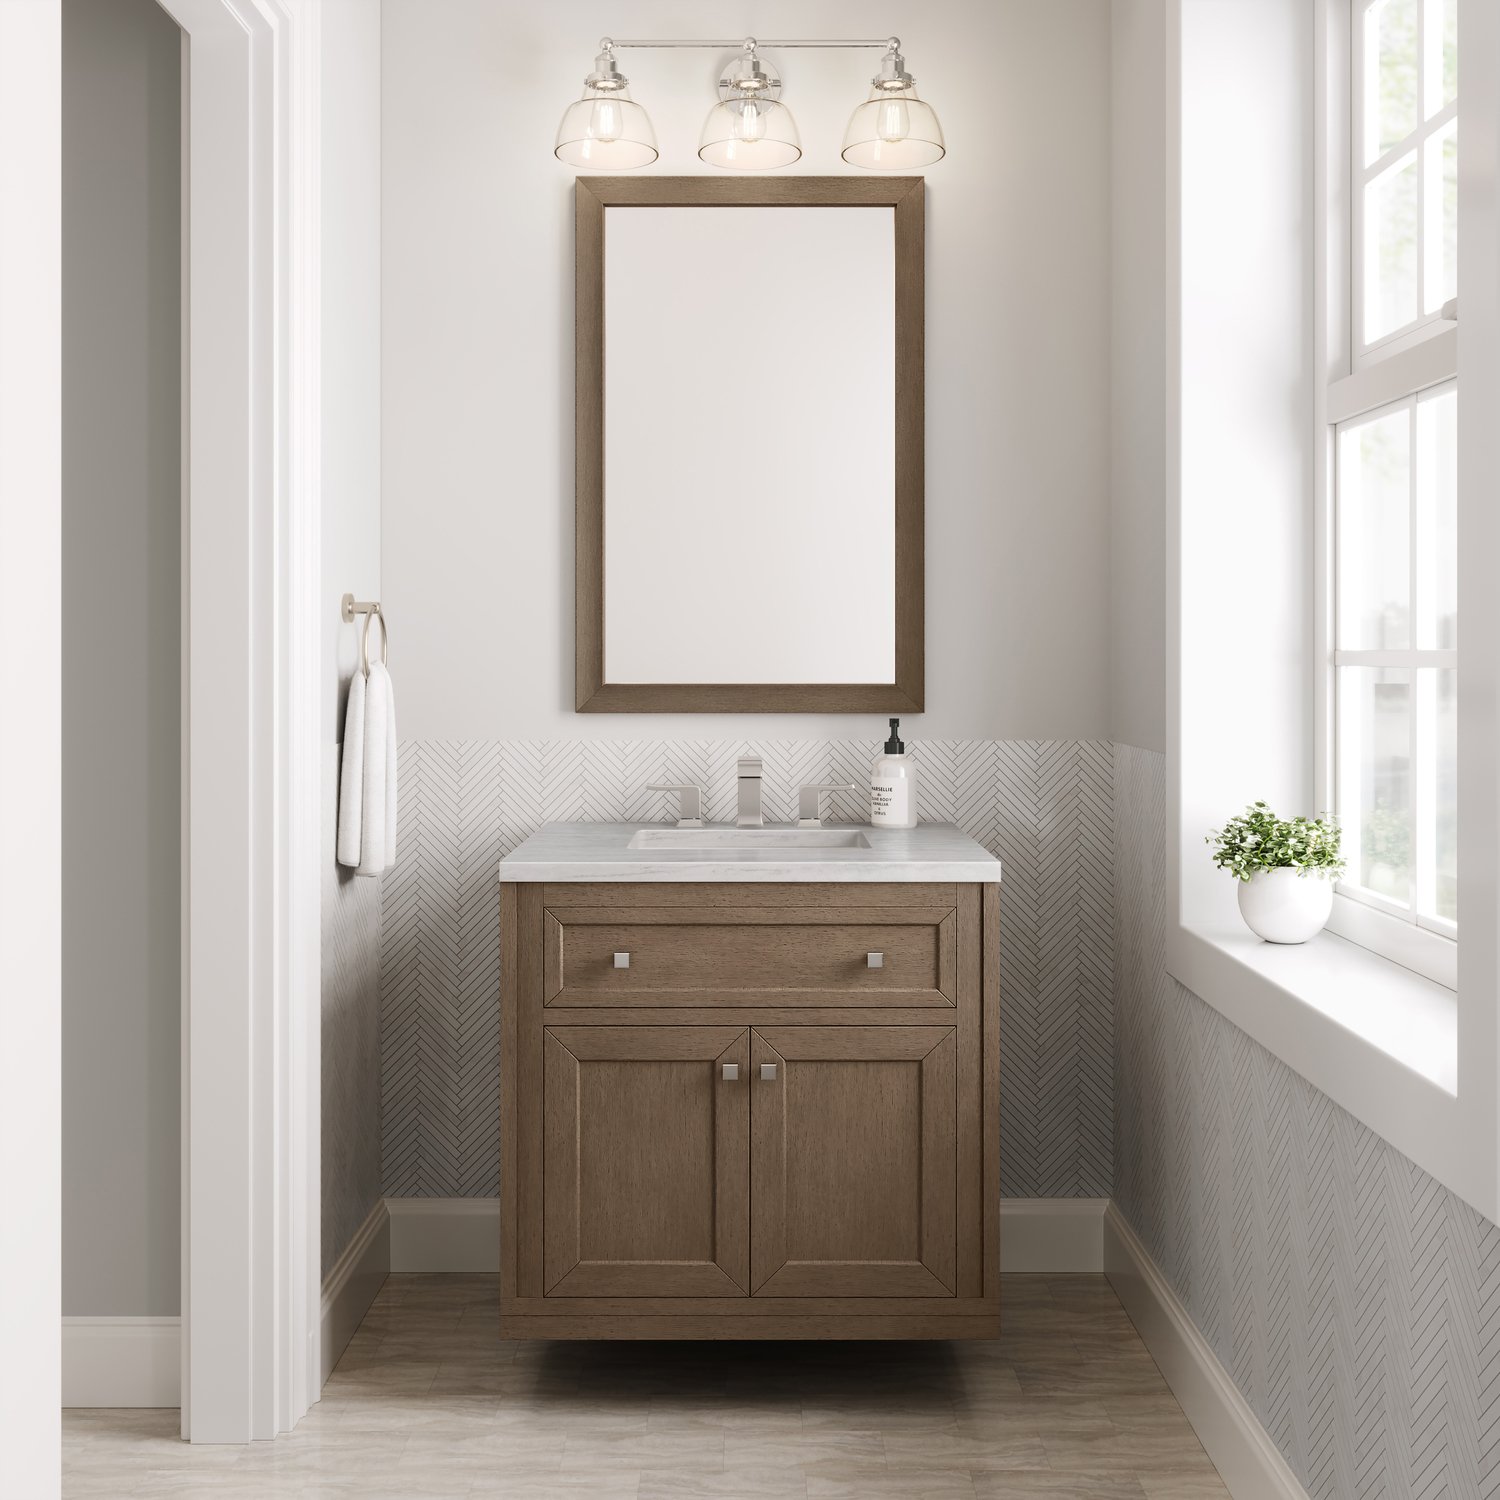  James Martin Vanity Bathroom Vanities Whitewashed Walnut Contemporary/Modern, Transitional